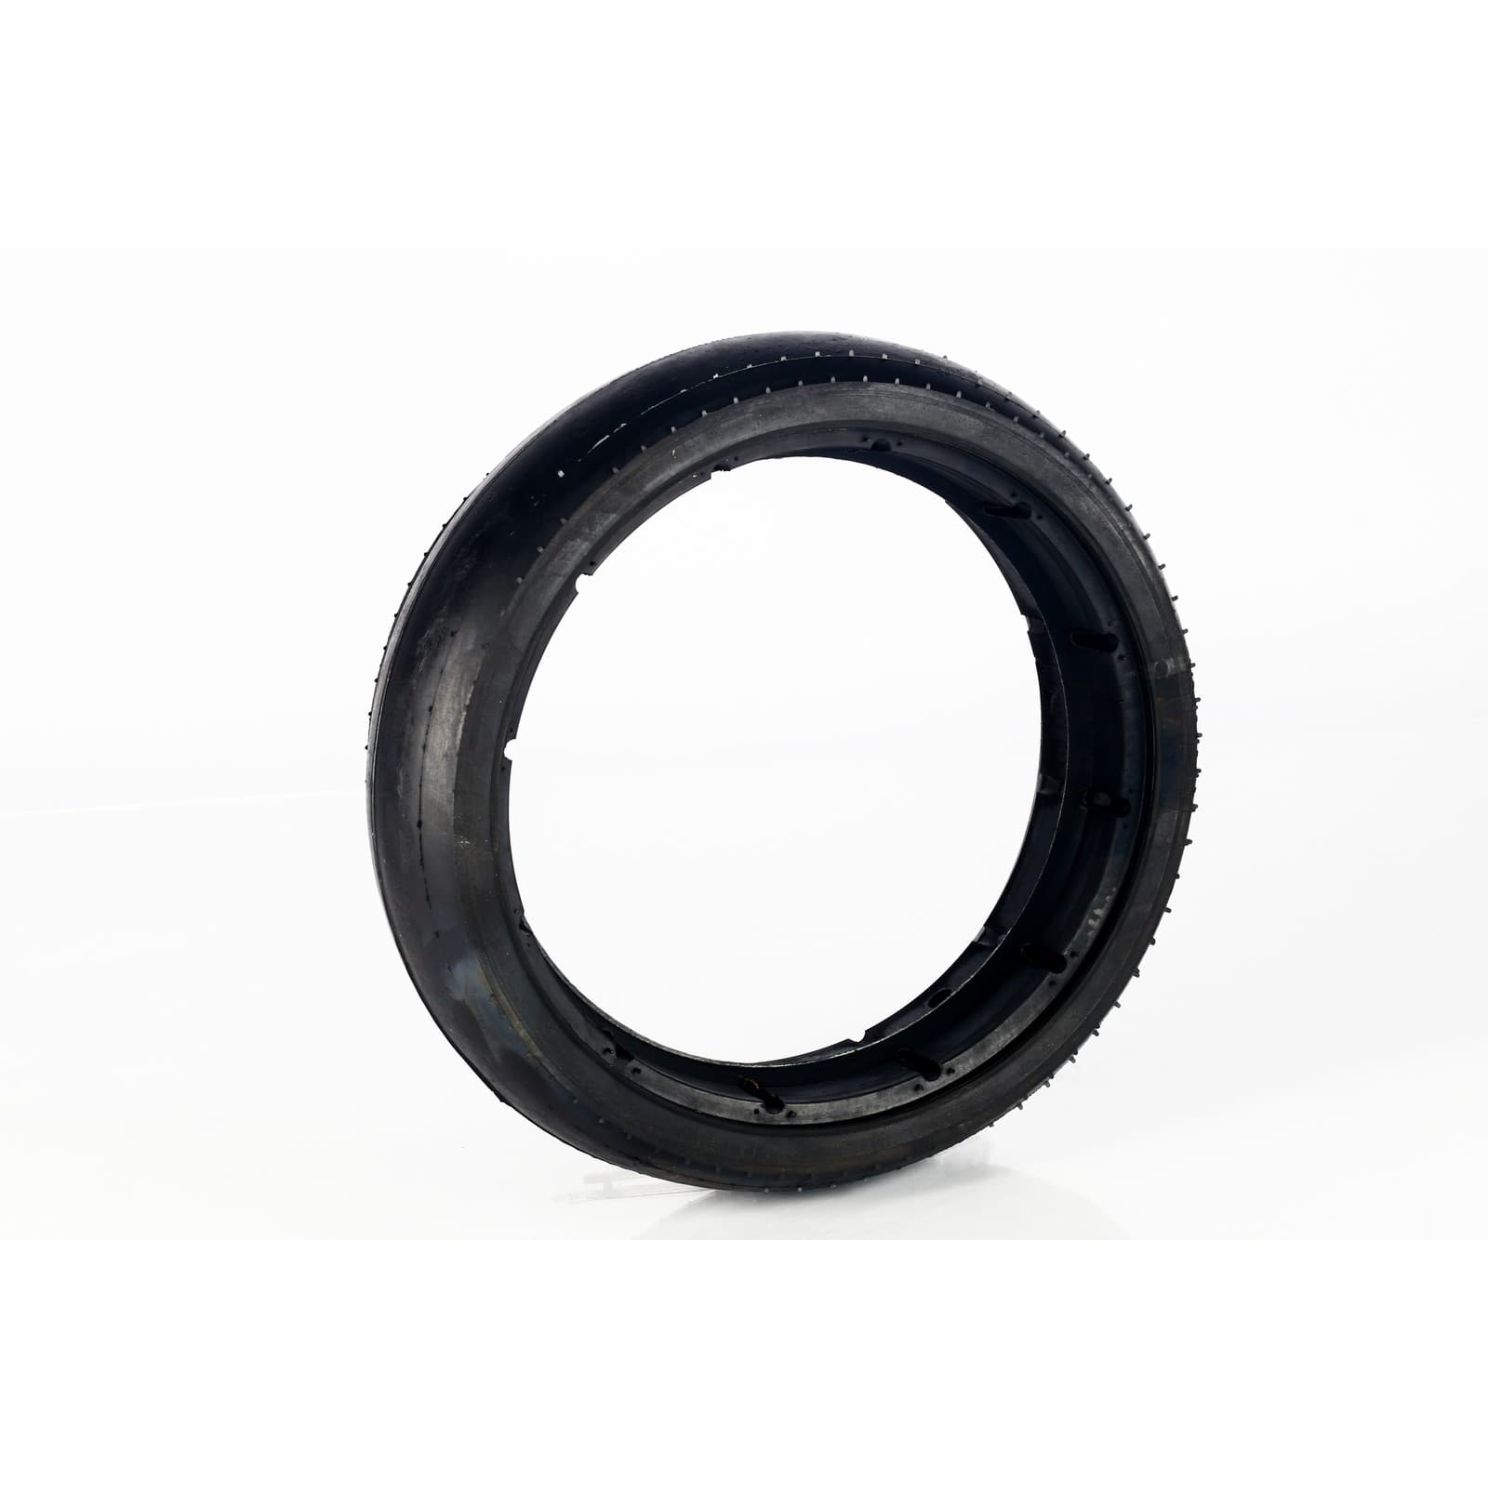 4.5" x 16" Case-IH/Deere Reduced Inner Diameter Gauge Wheel Tire